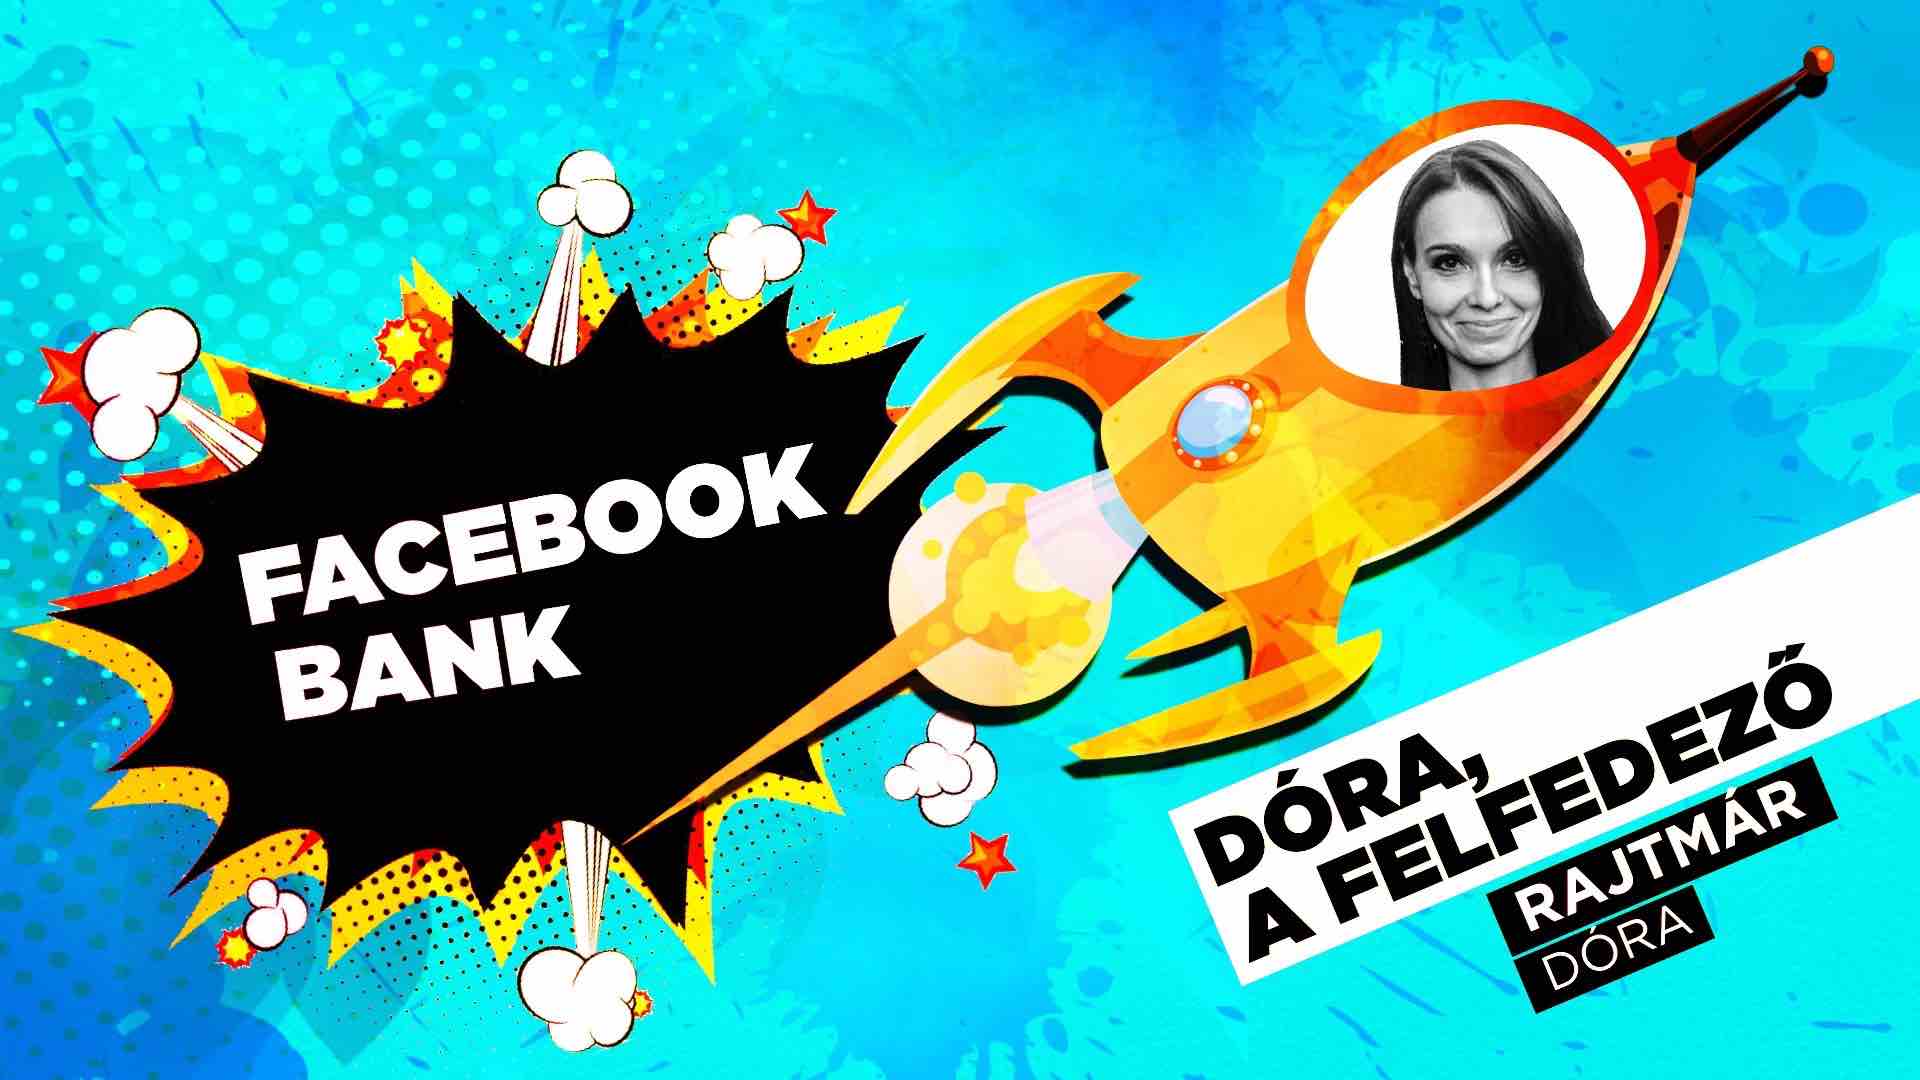 Facebook chatbot bank